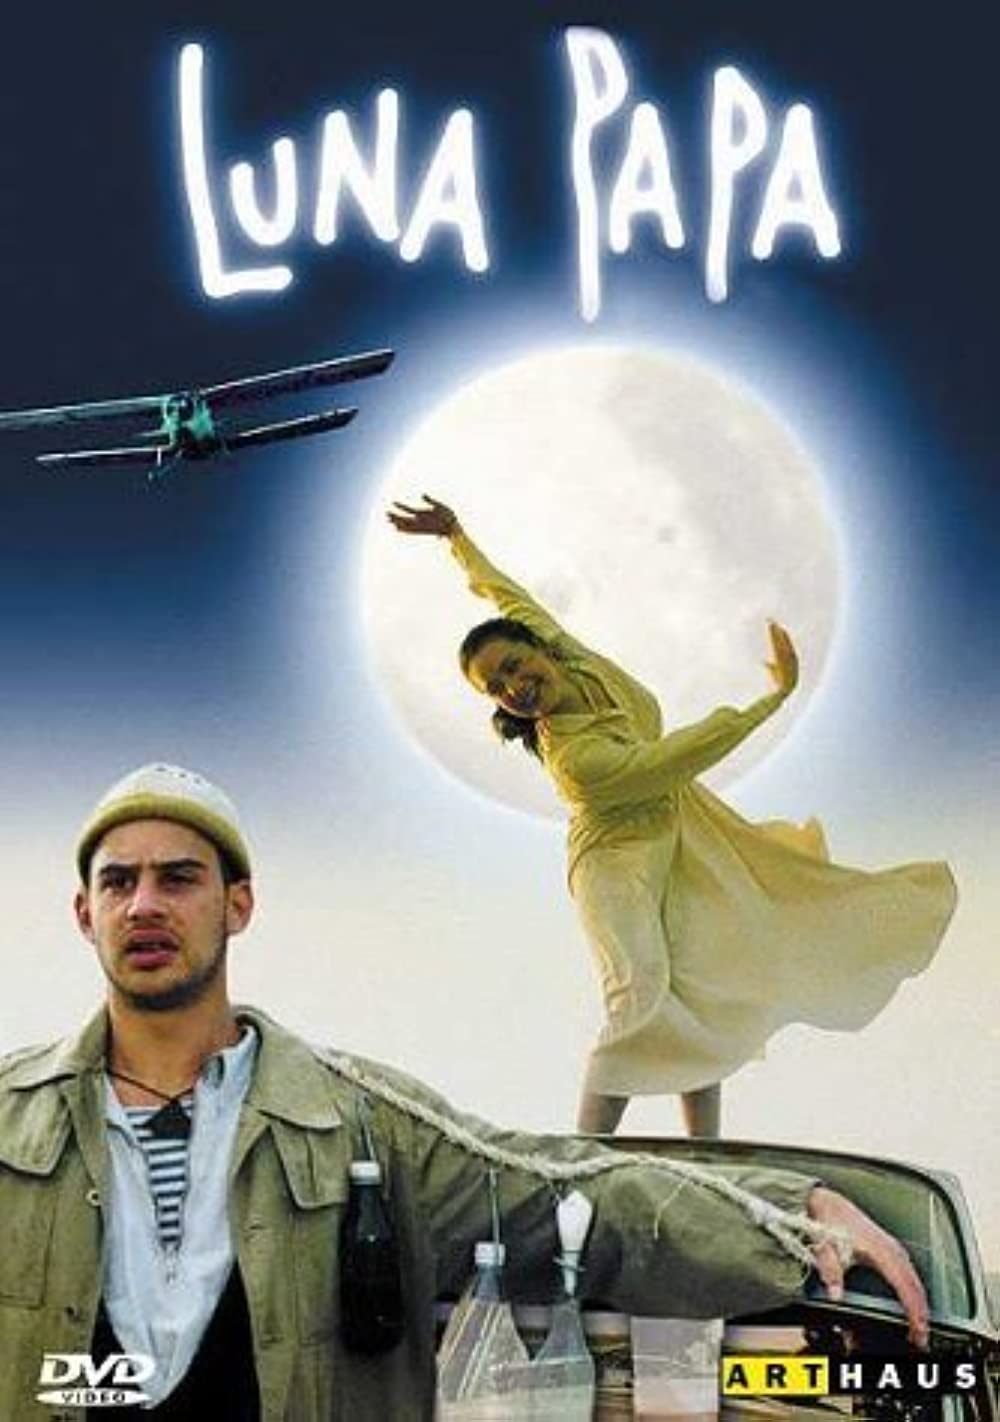 Filmbeschreibung zu Luna Papa